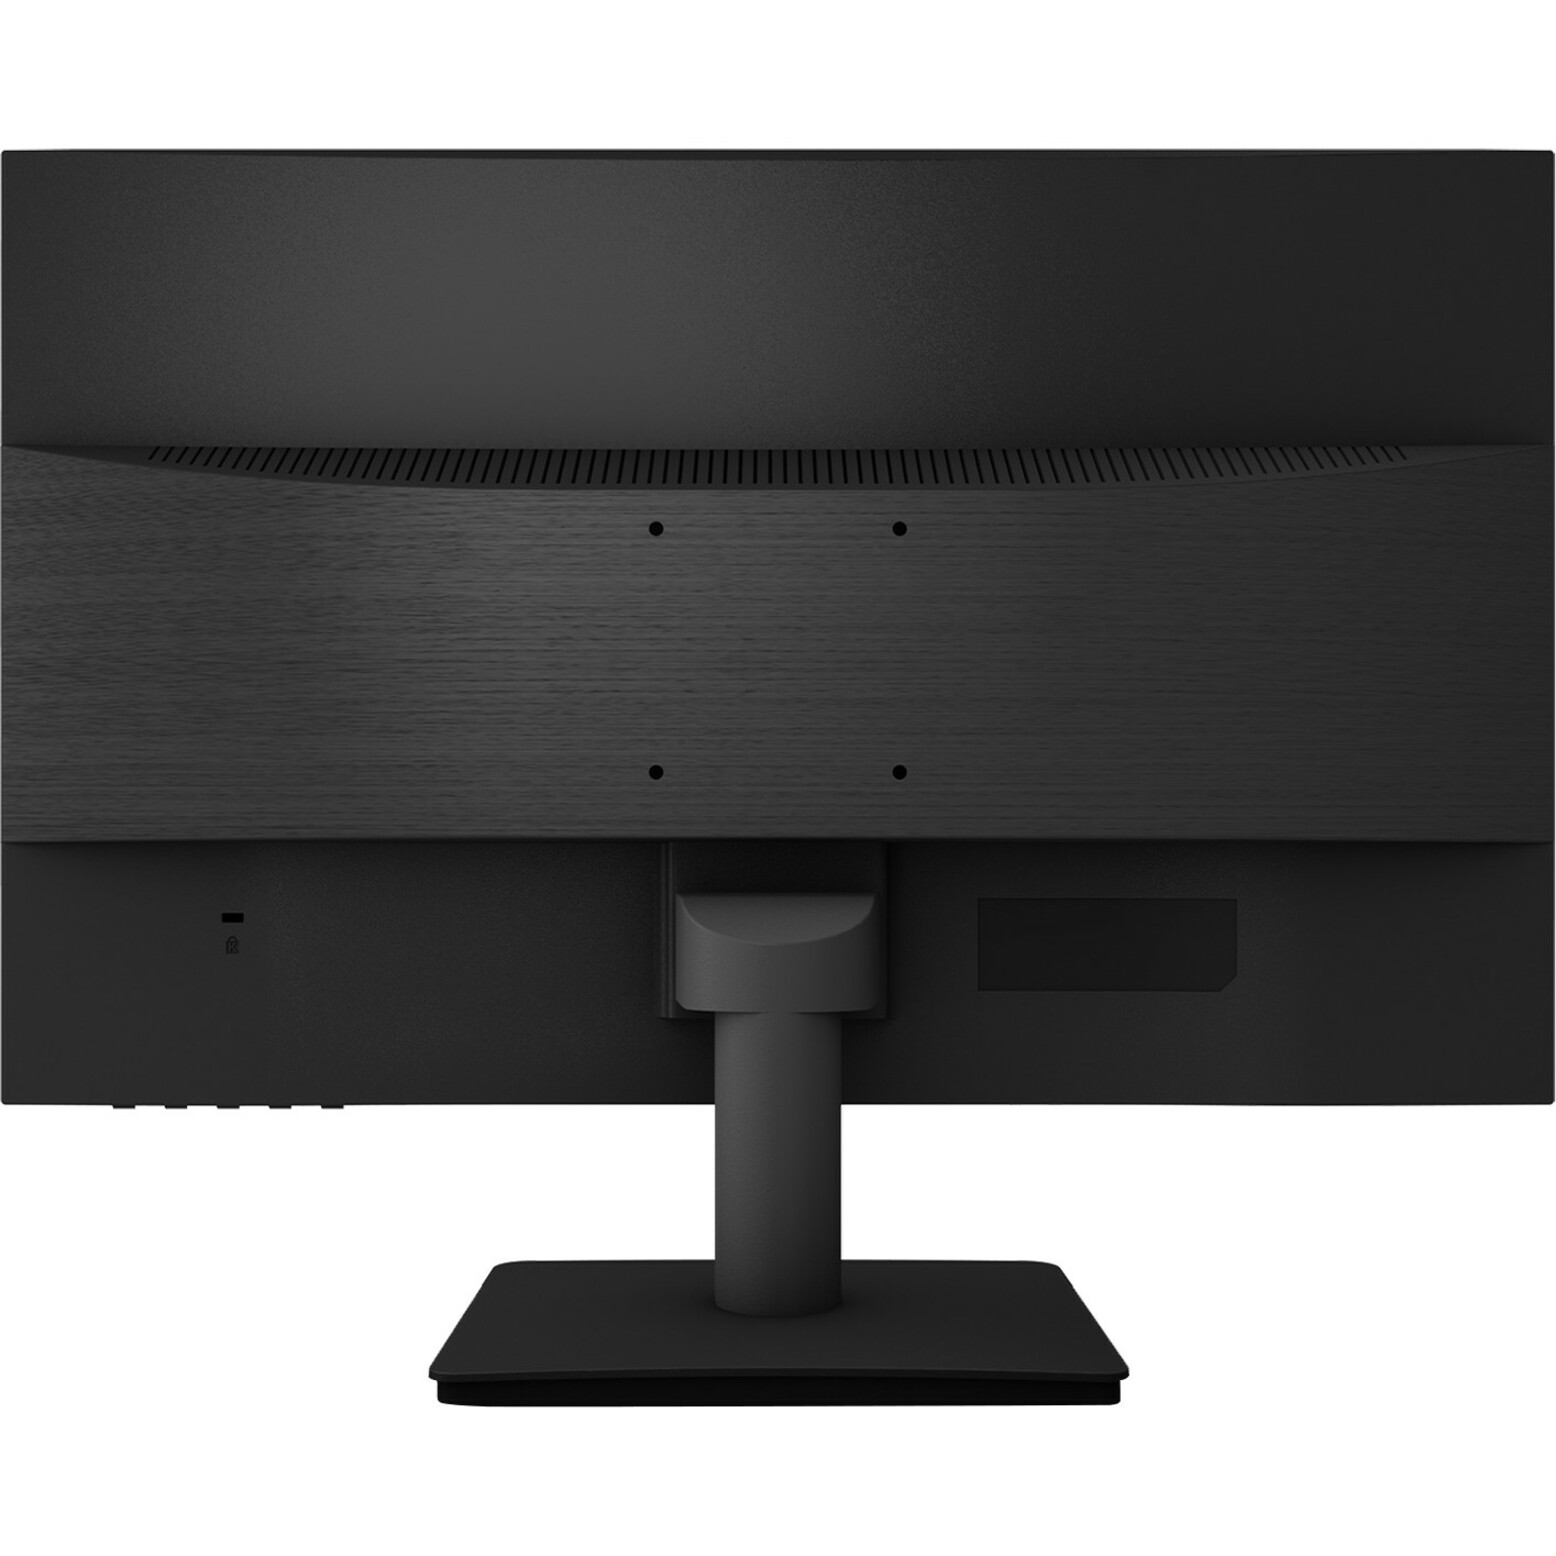 Planar PLL2250MW 22" Class Full HD LCD Monitor, 16:9, Black - image 2 of 4